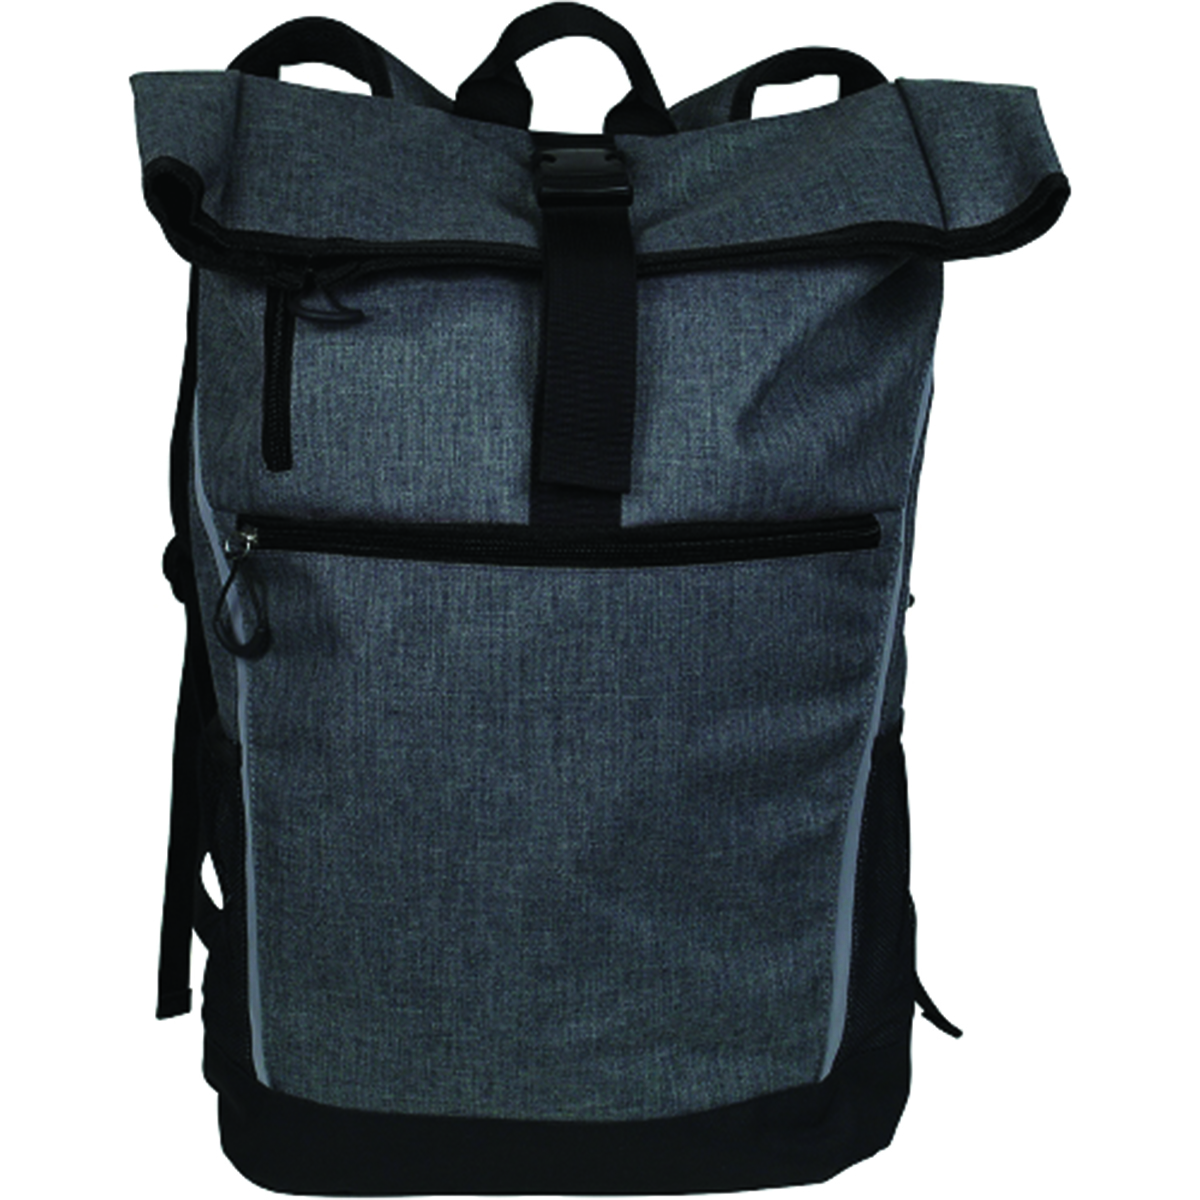 Black Urban Pack Backpack